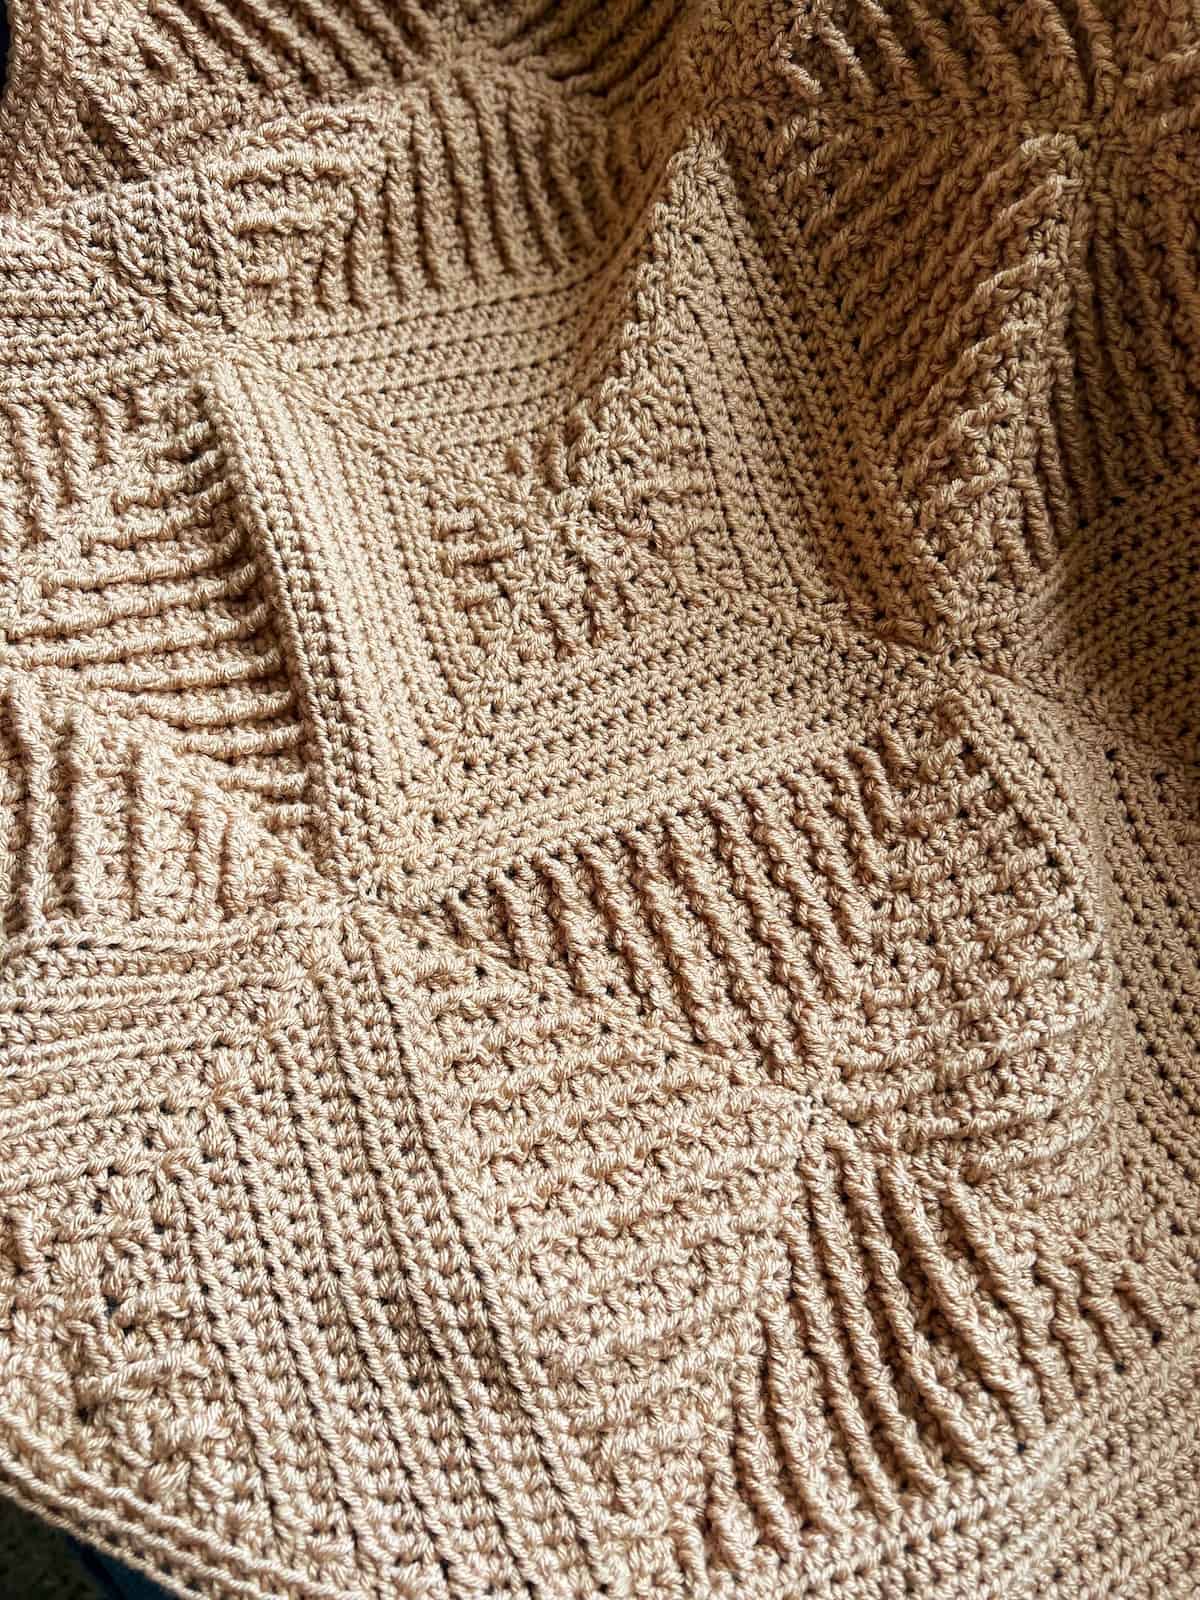 Textured crochet blanket using corner to corner crochet squares.